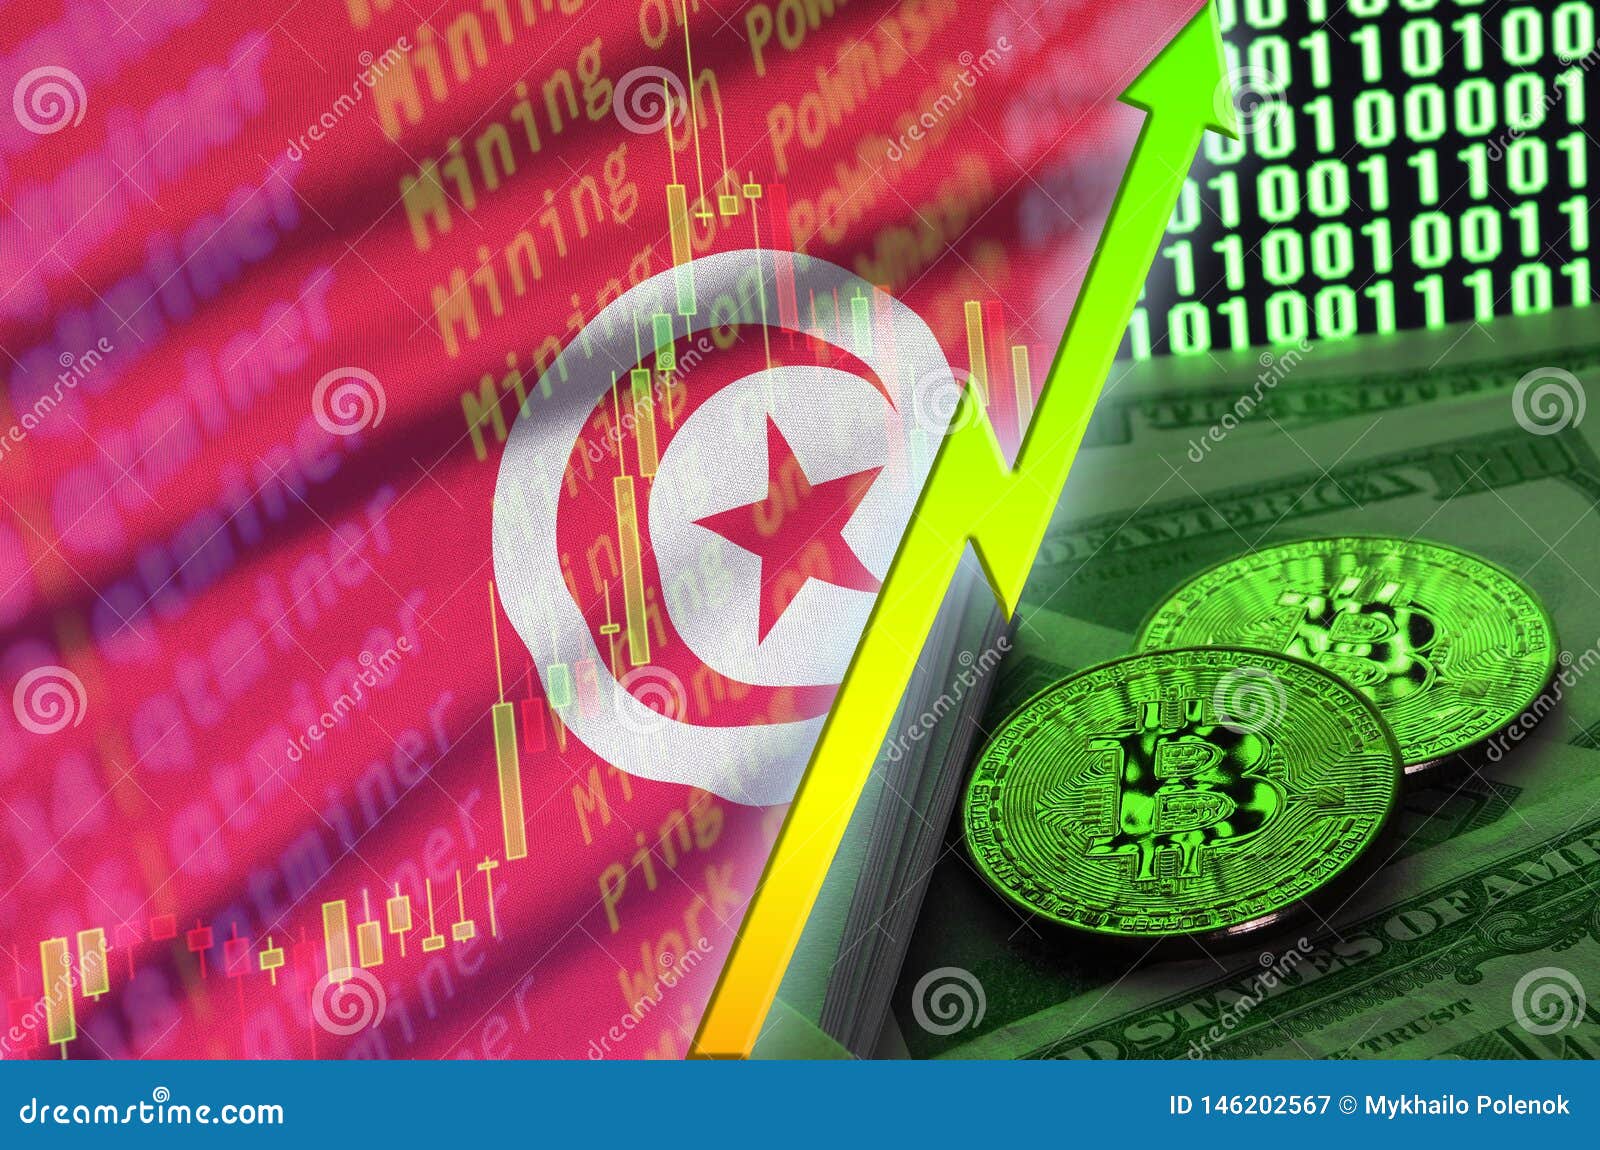 can tunisia buy bitcoin